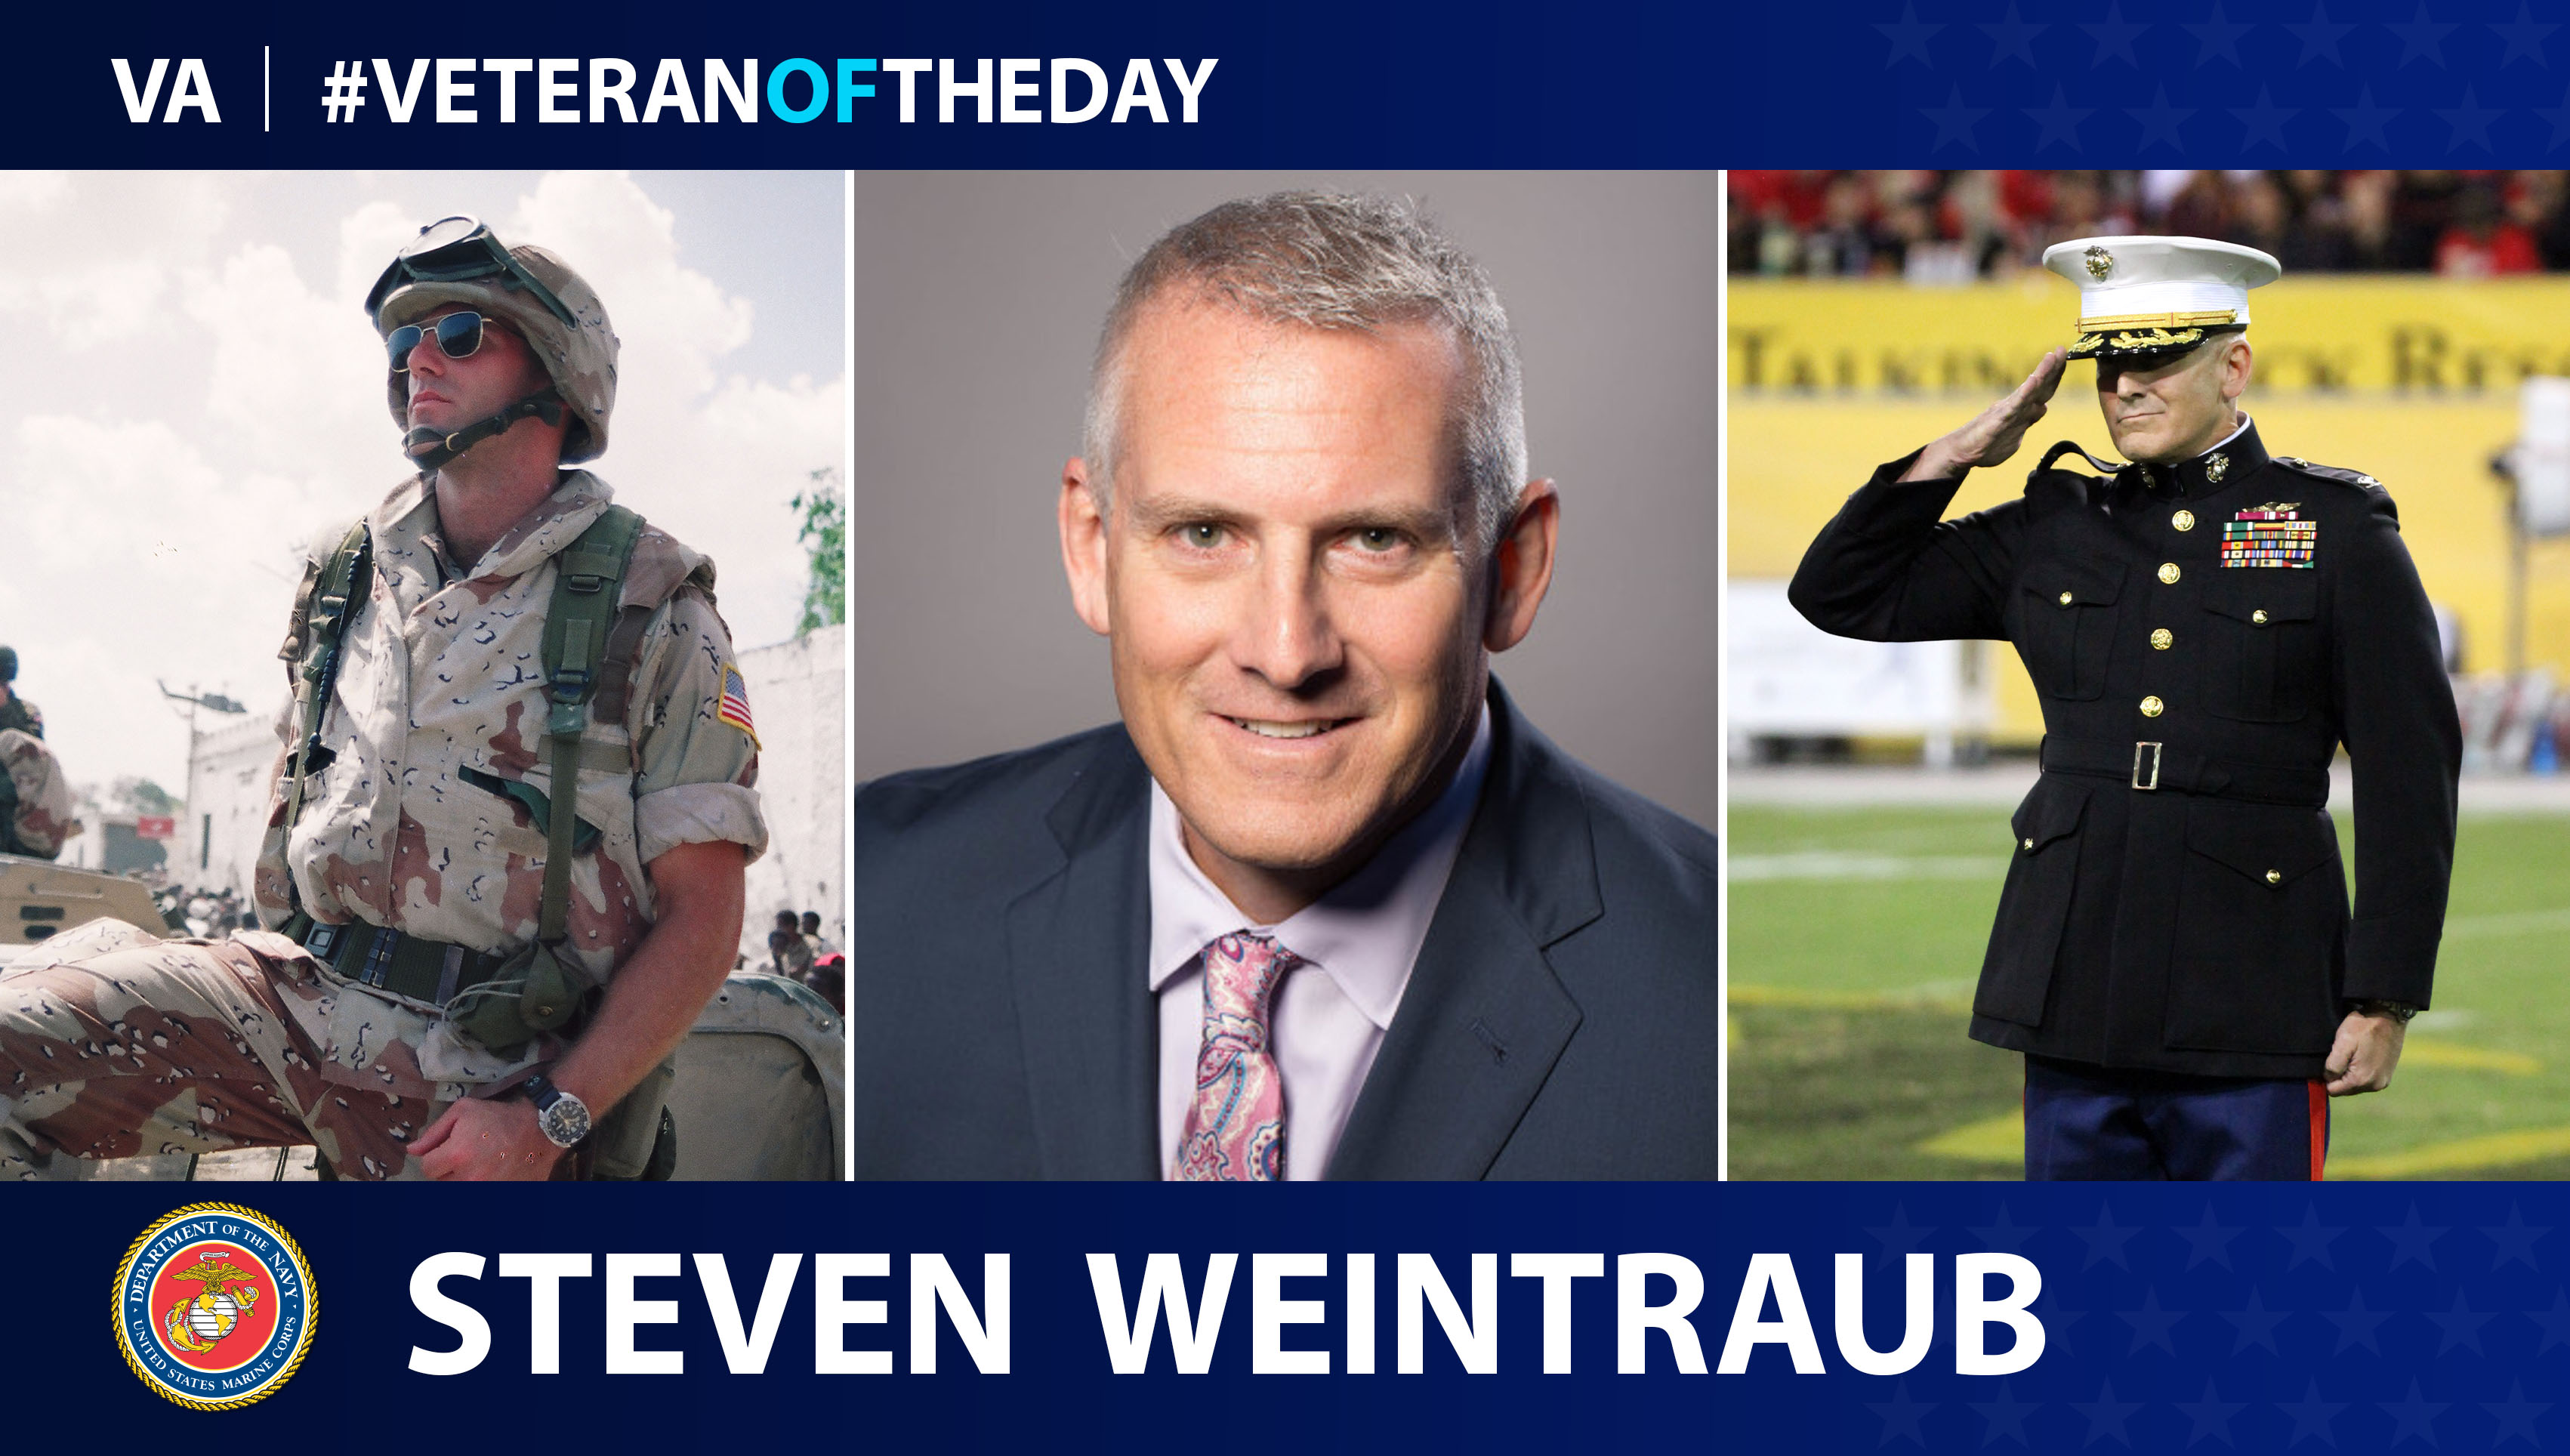 Marine Veteran Steve Weintraub is today's Veteran Of The Day.